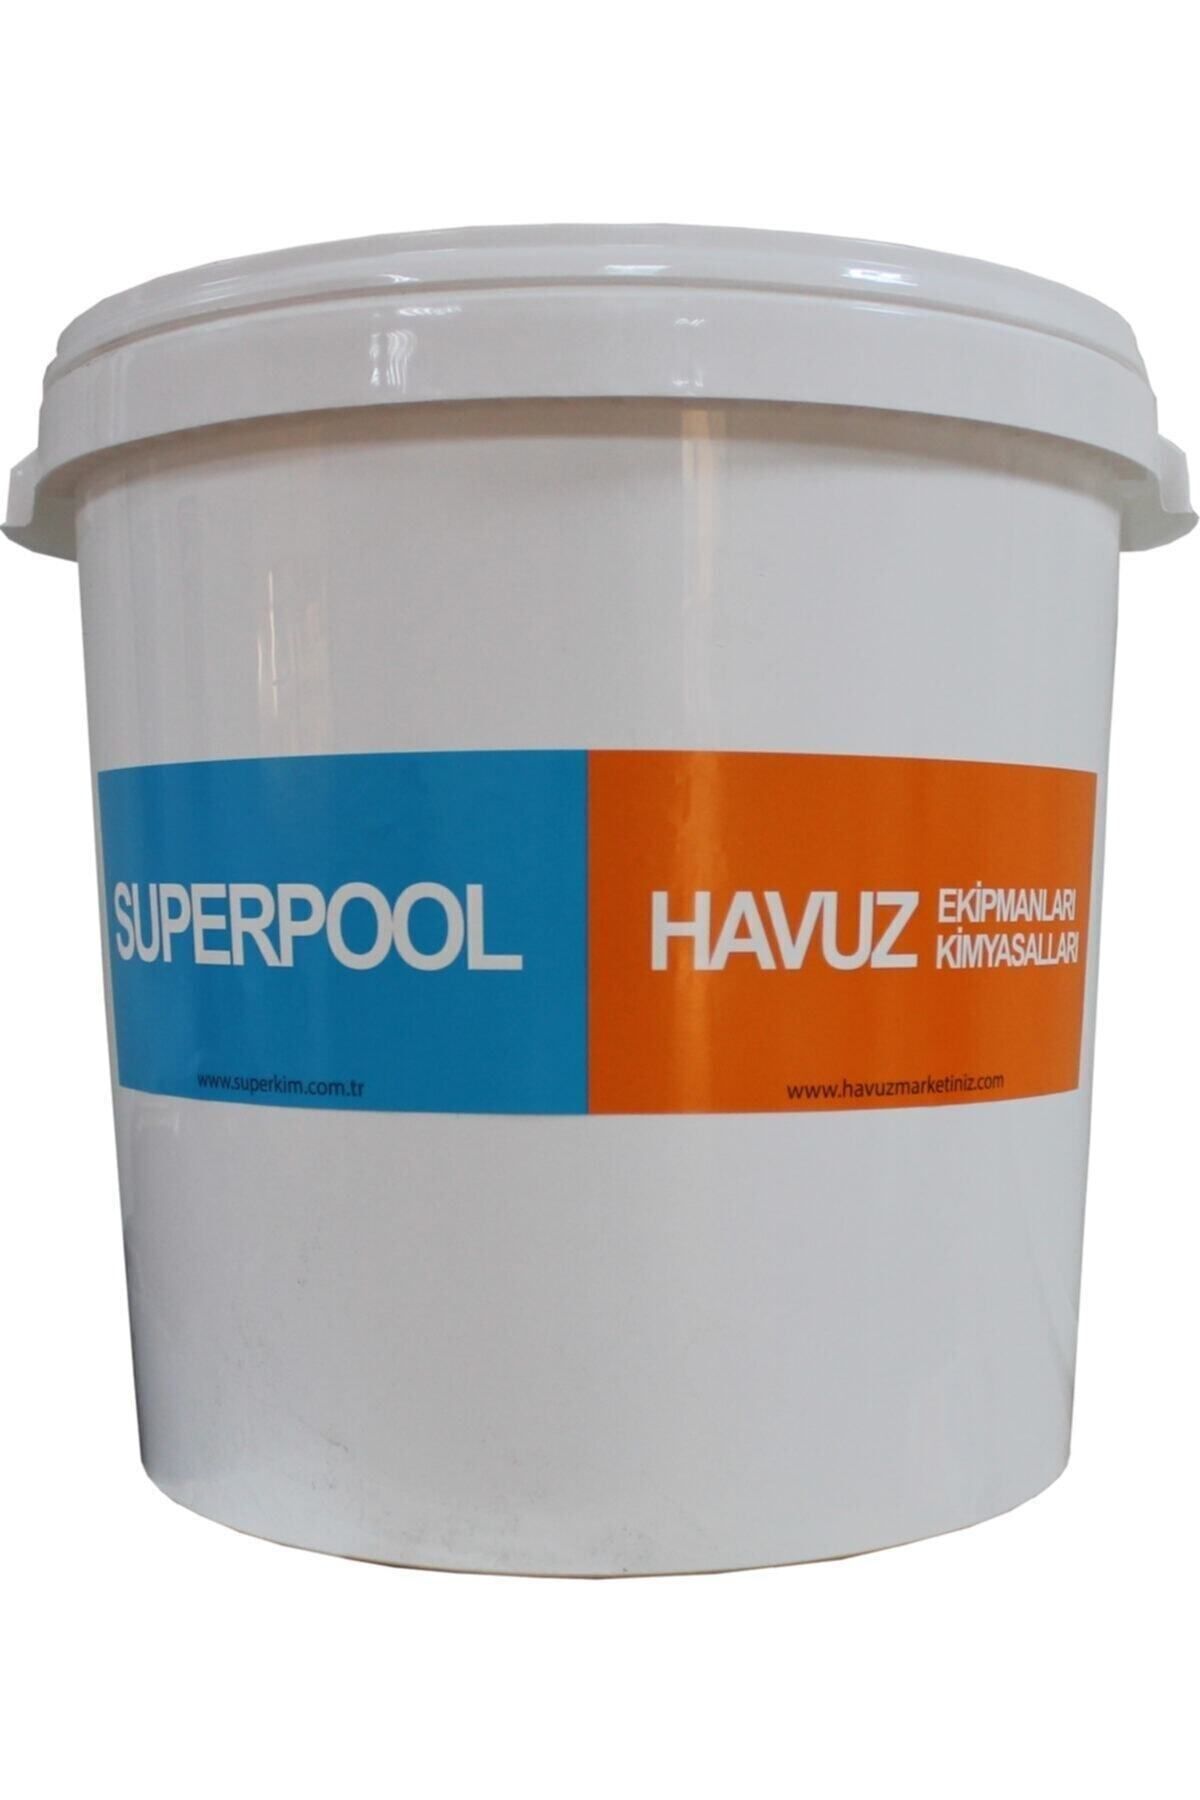 SPP SUPERPOOL Toz Klor 90gr 25 Kg (havuz Suyu Dezenfektanı)